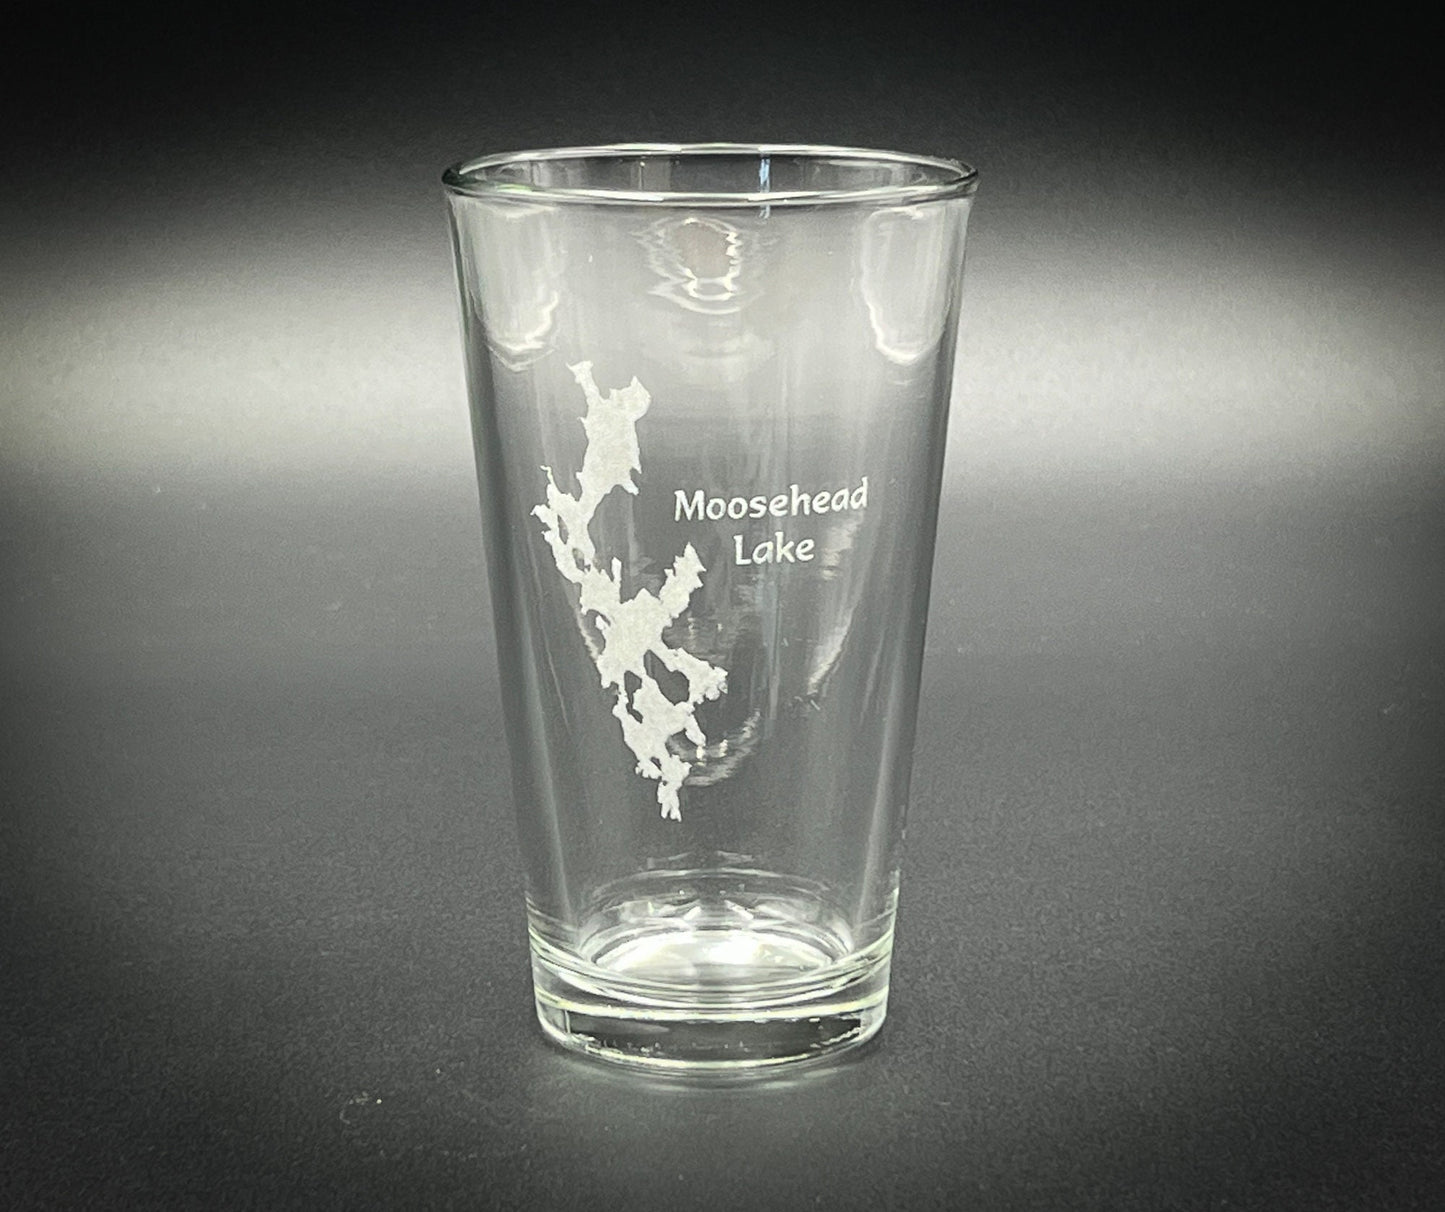 Moosehead Lake Maine - Laser engraved pint glass